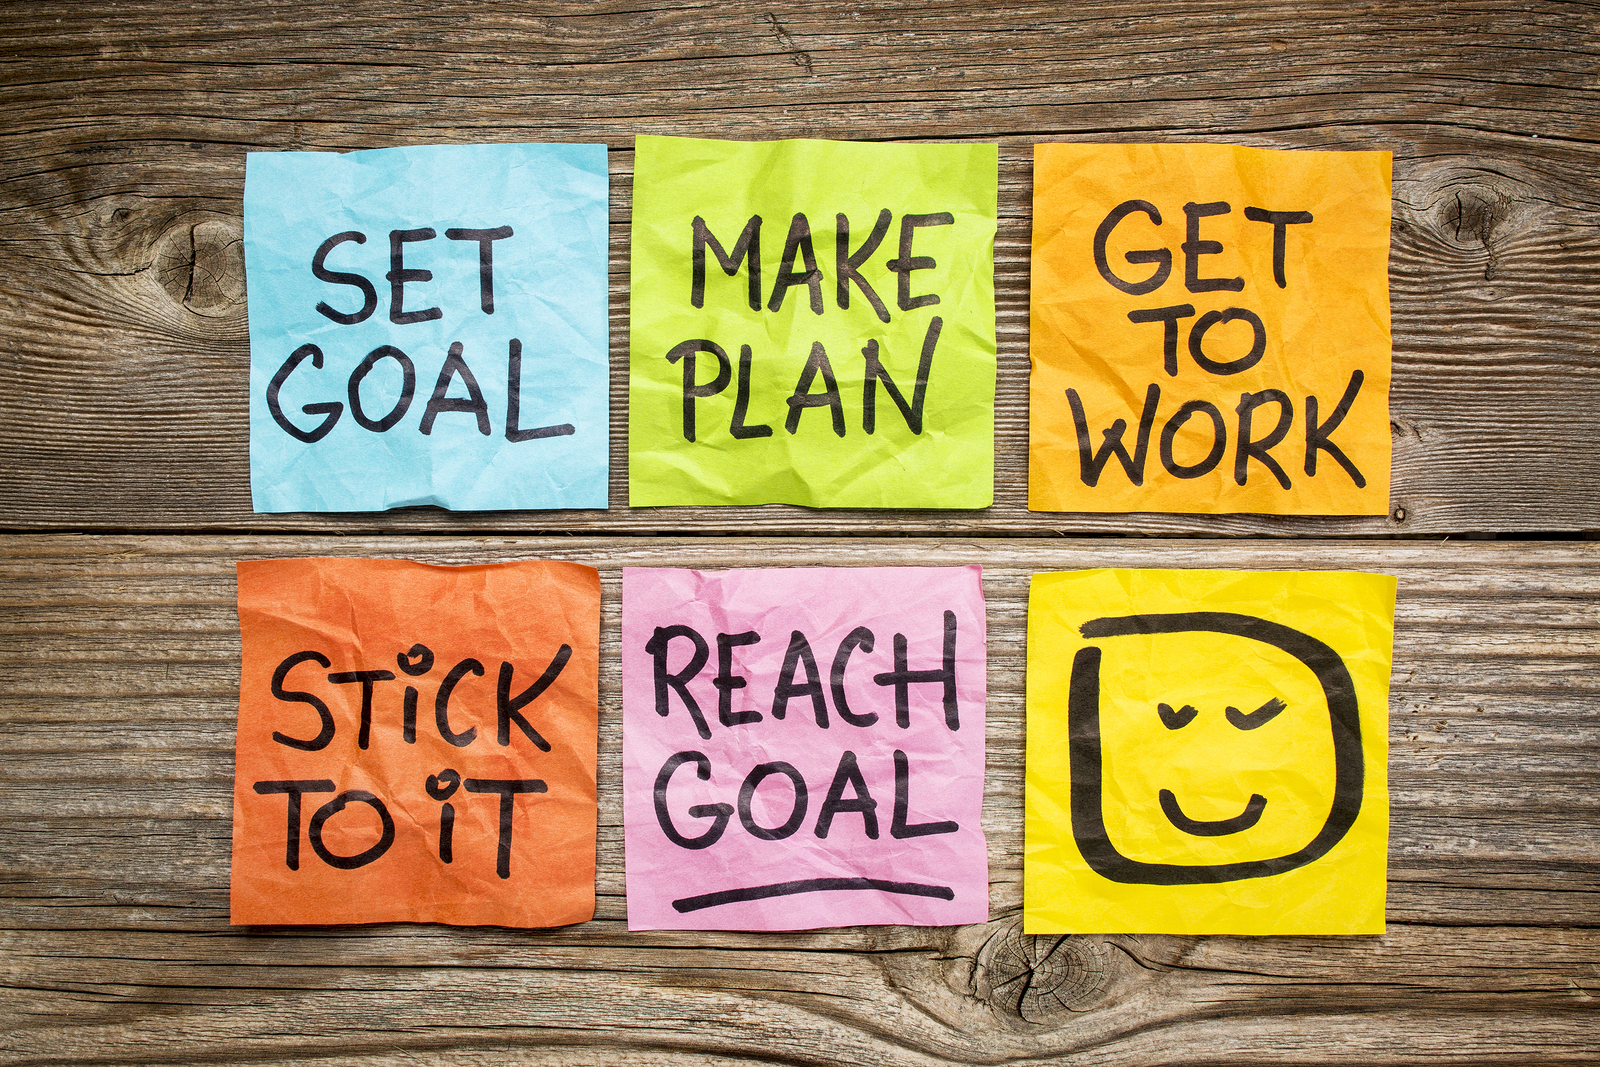 set goal, make plan, work, stick to it, reach goal - a success c